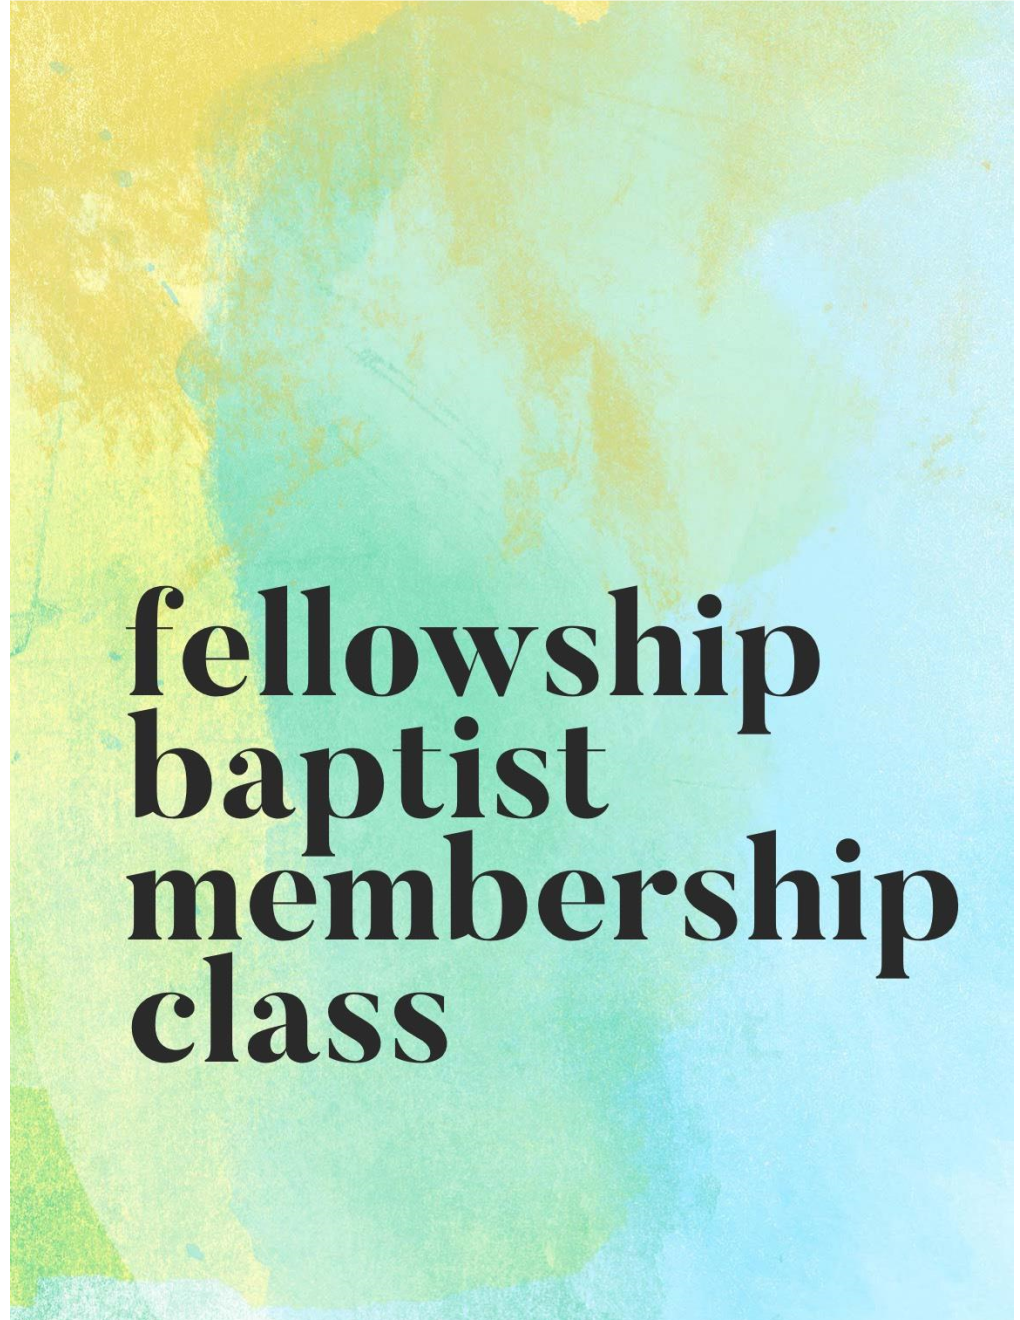 What Is a Fellowship Baptist Christian?